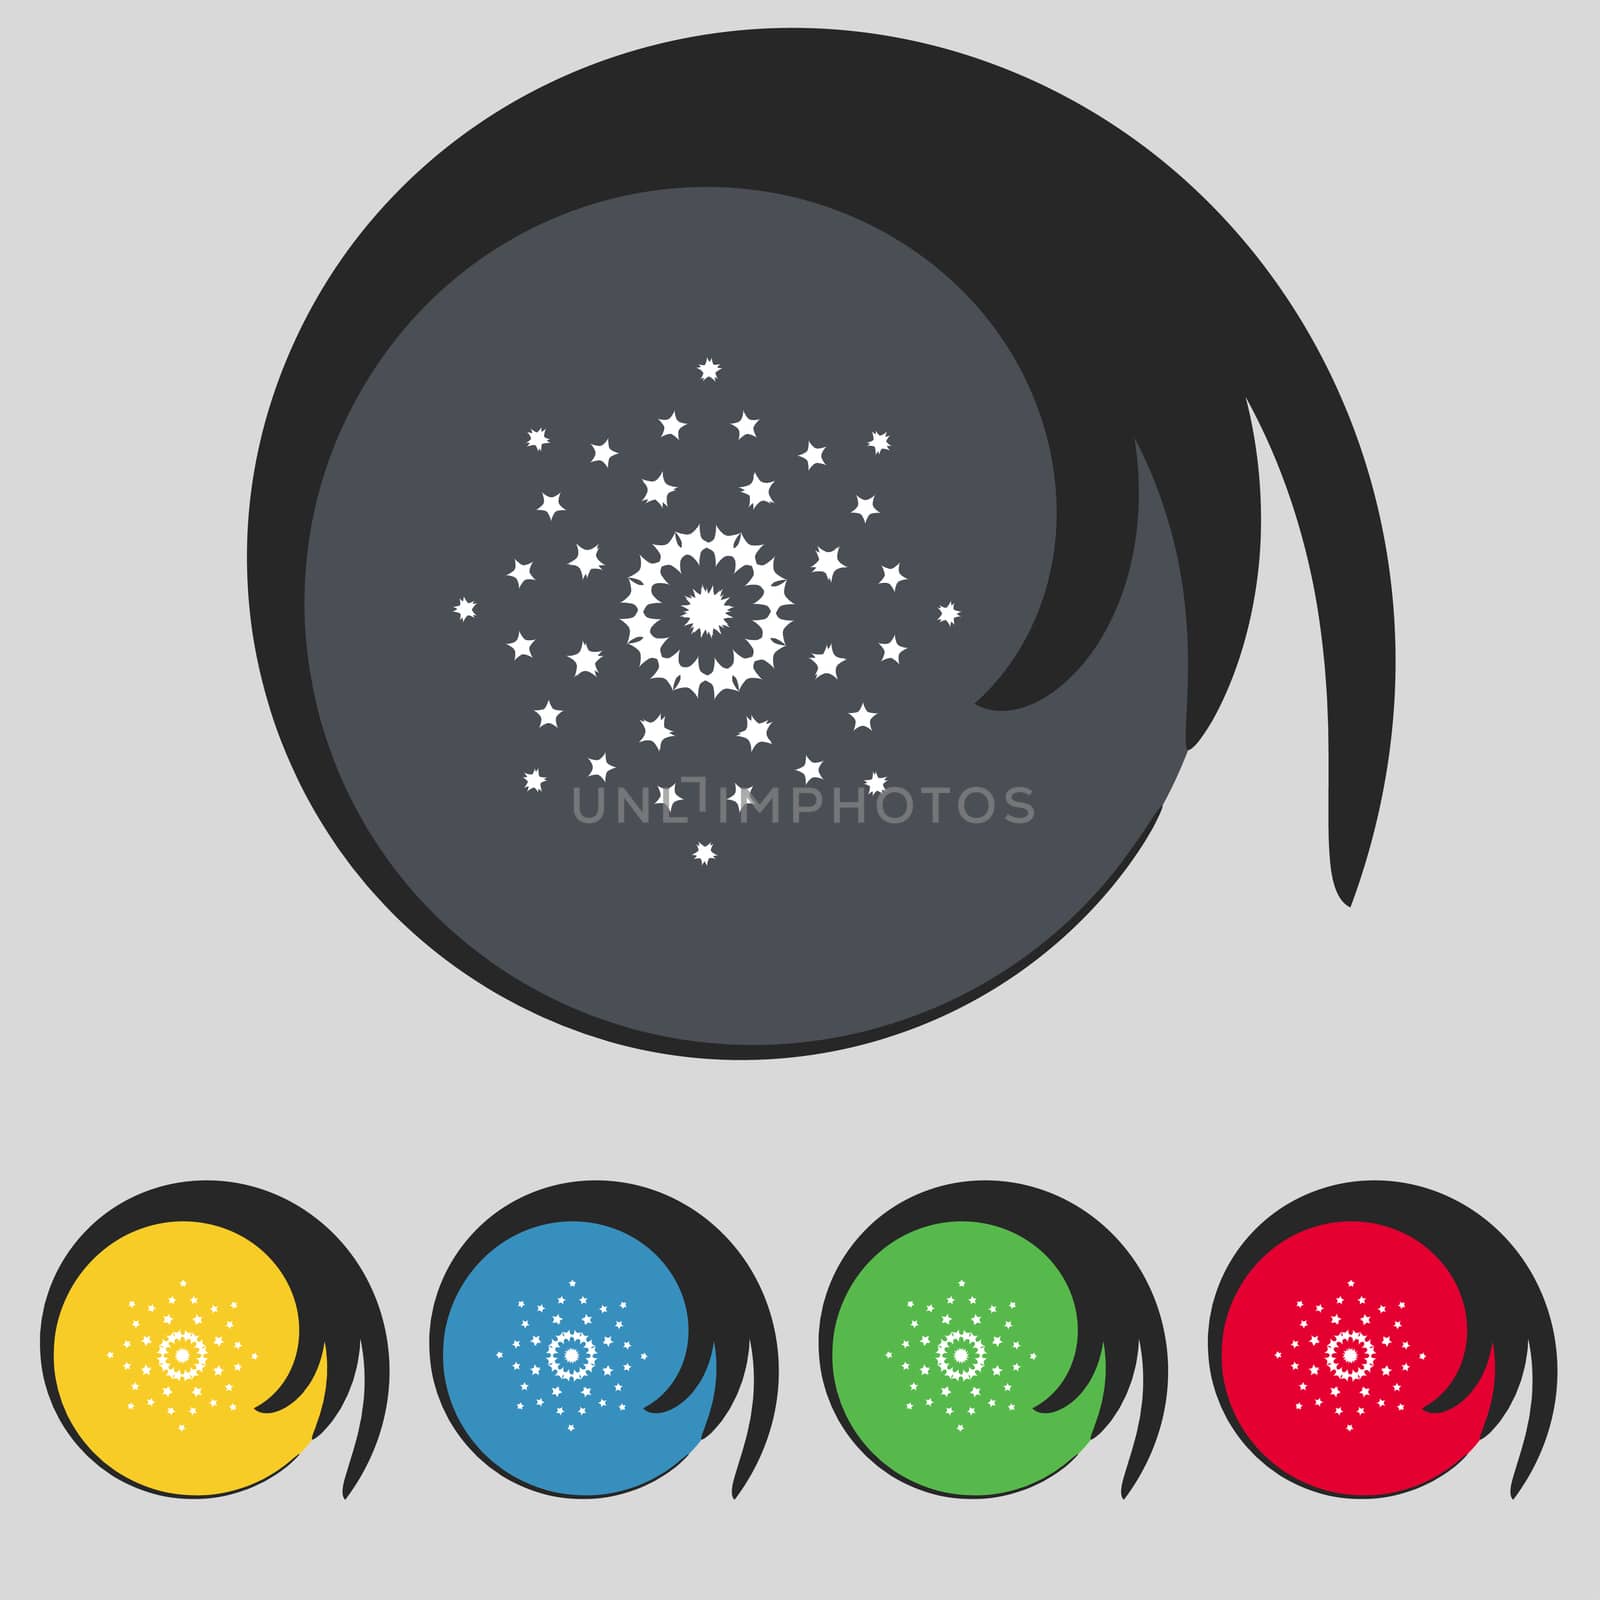 Star sign icon. Favorite button. Navigation symbol. Set colourful buttons illustration